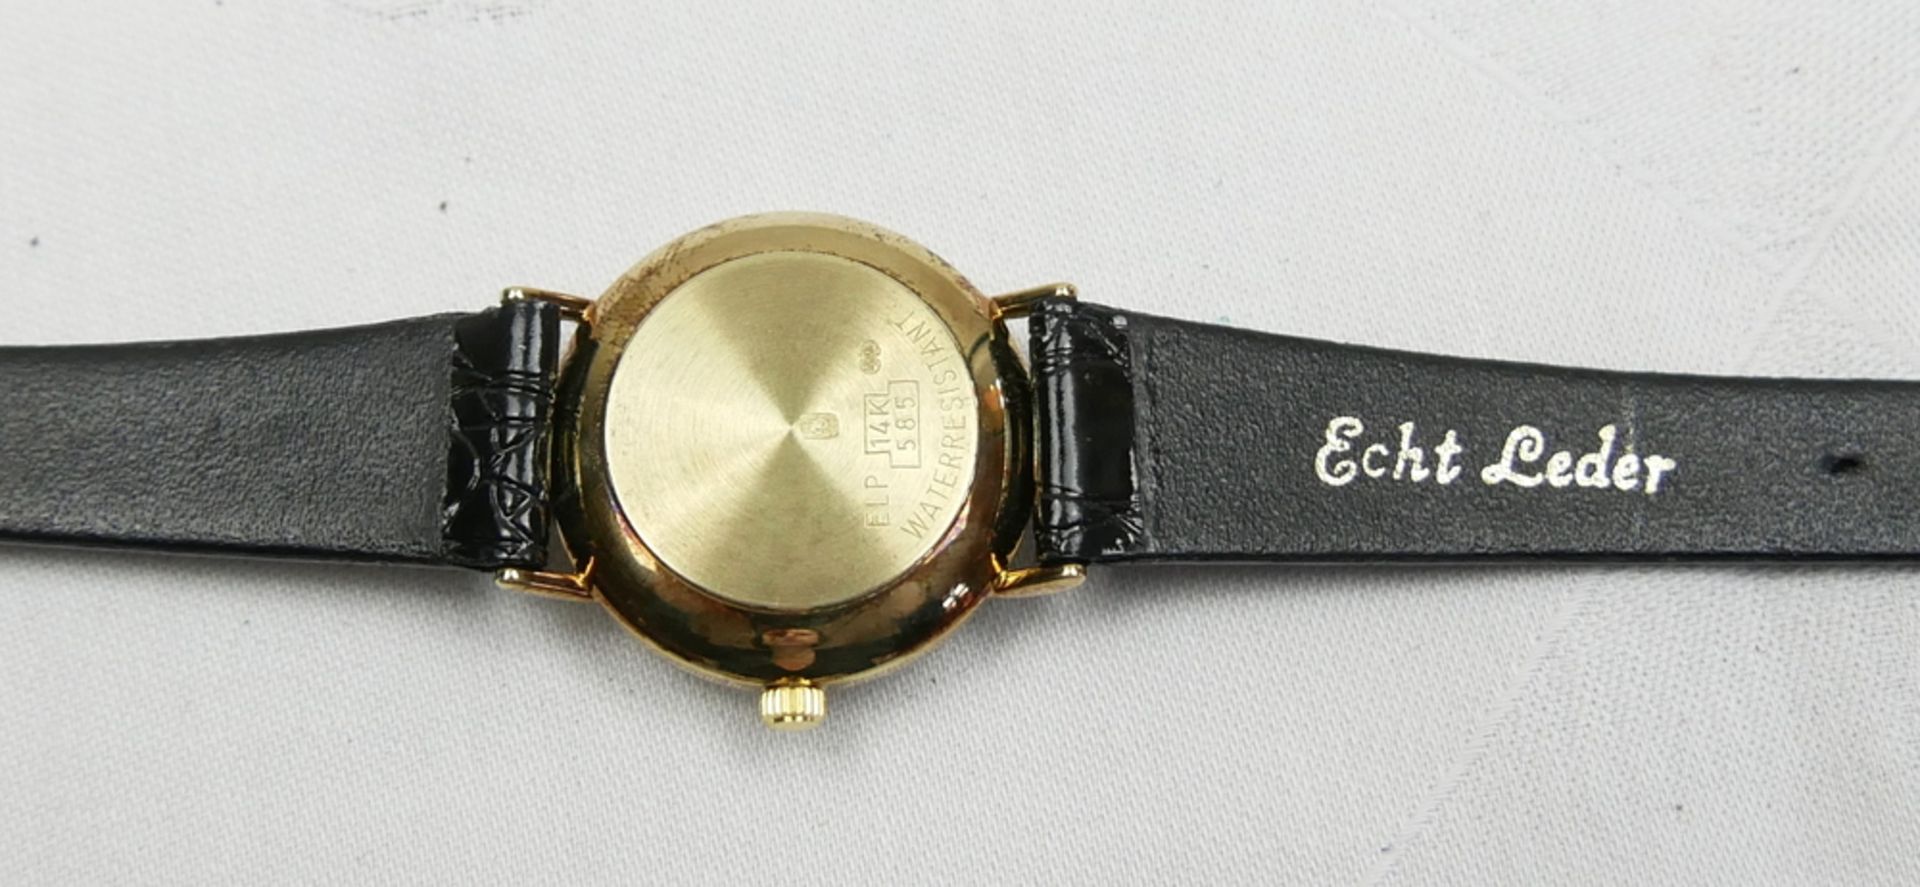 Damen Armbanduhr "Geneve" Automatic 25 Jewels im Original Karton. Funktion nicht geprüft - Image 2 of 2